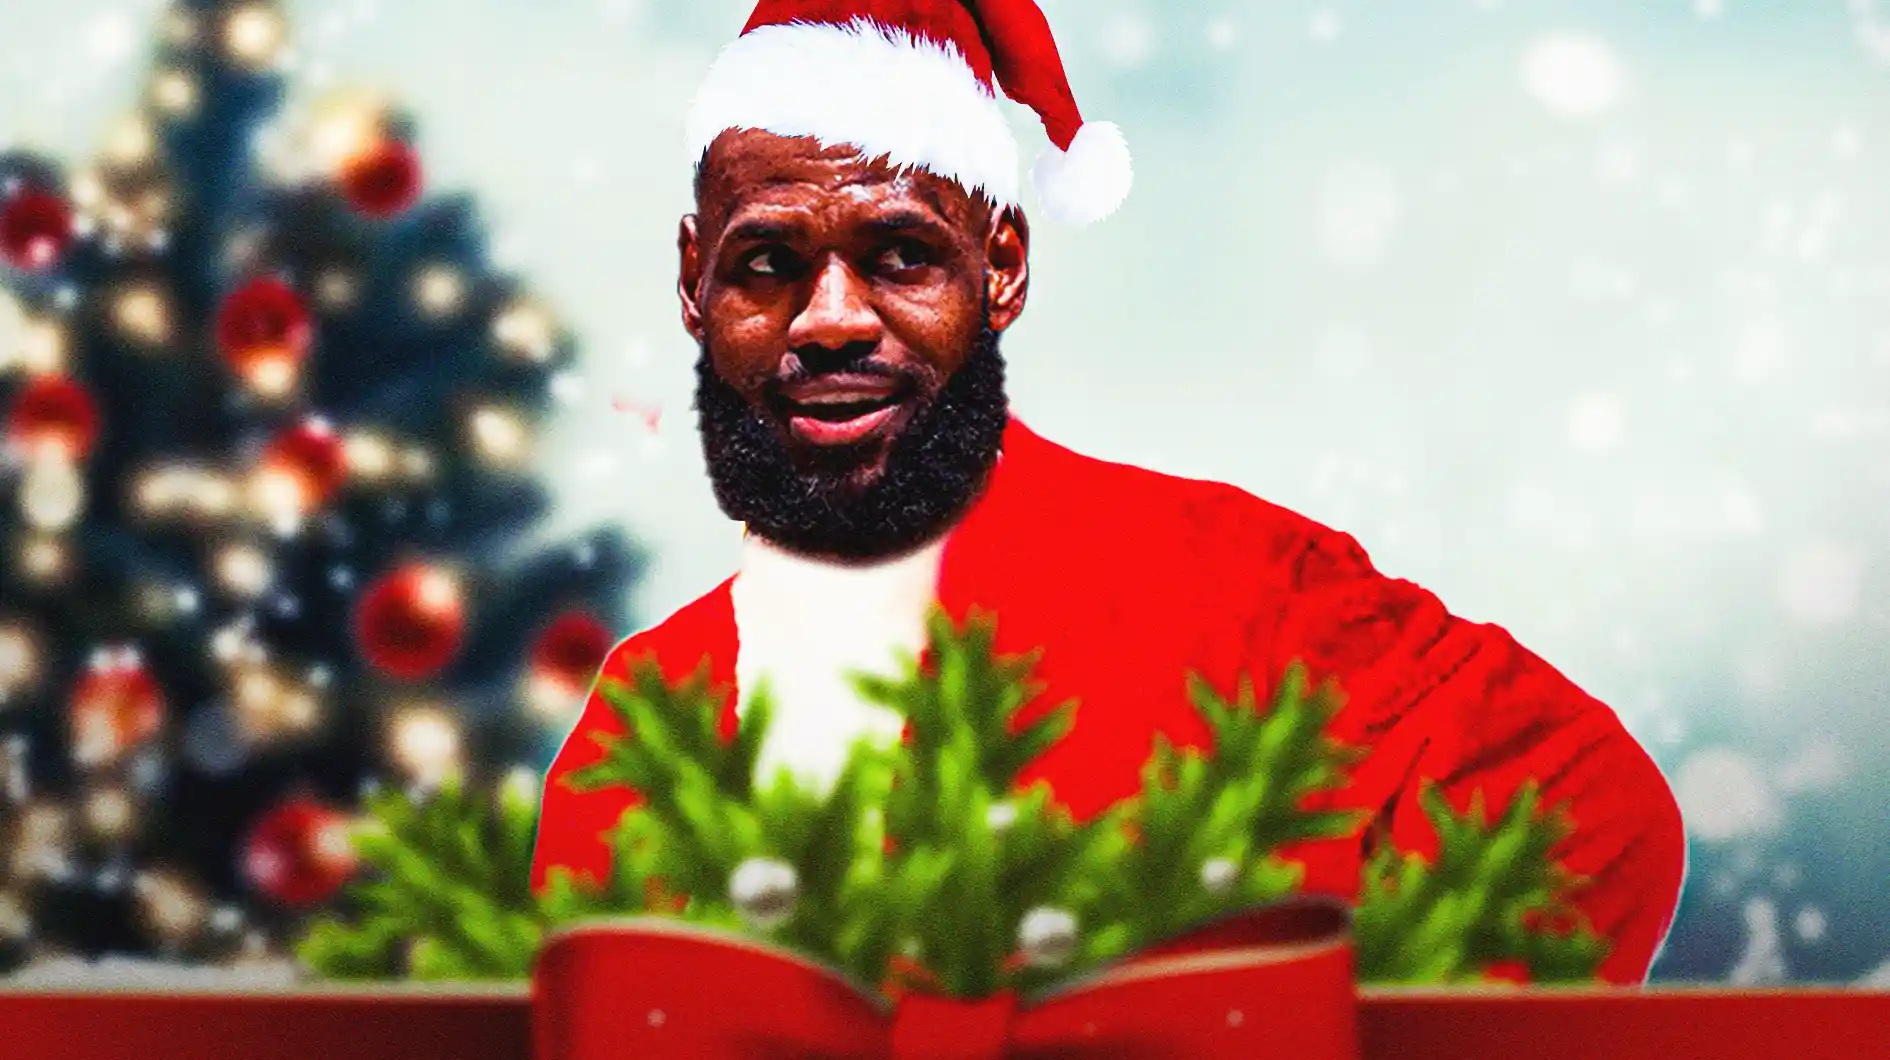 LeBron James in a Santa suit